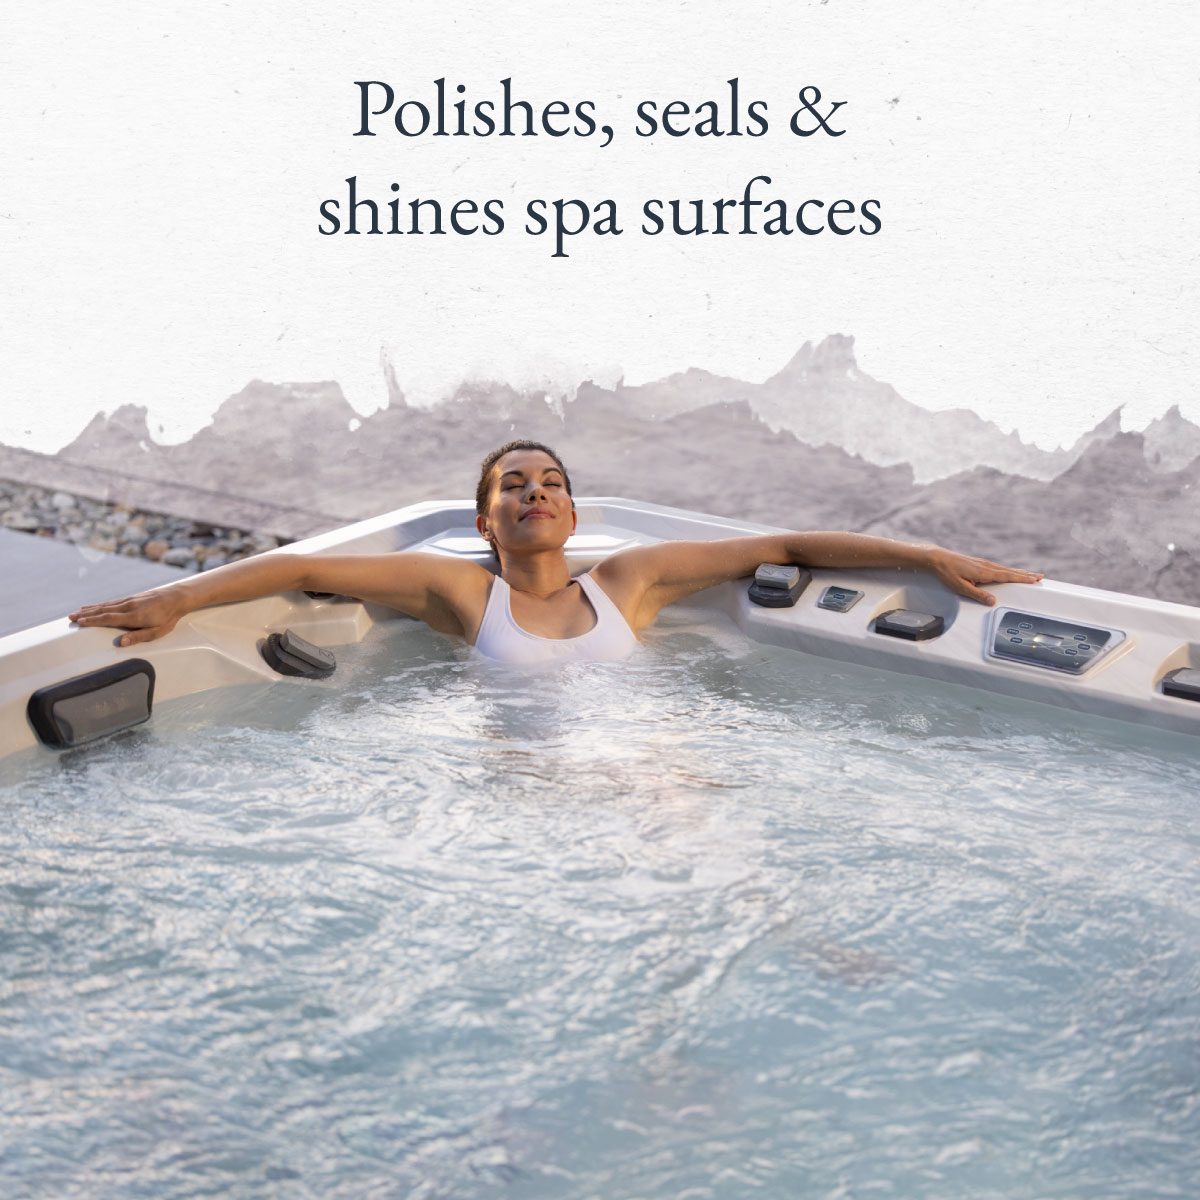 Polishes, seals & shines spa surfaces